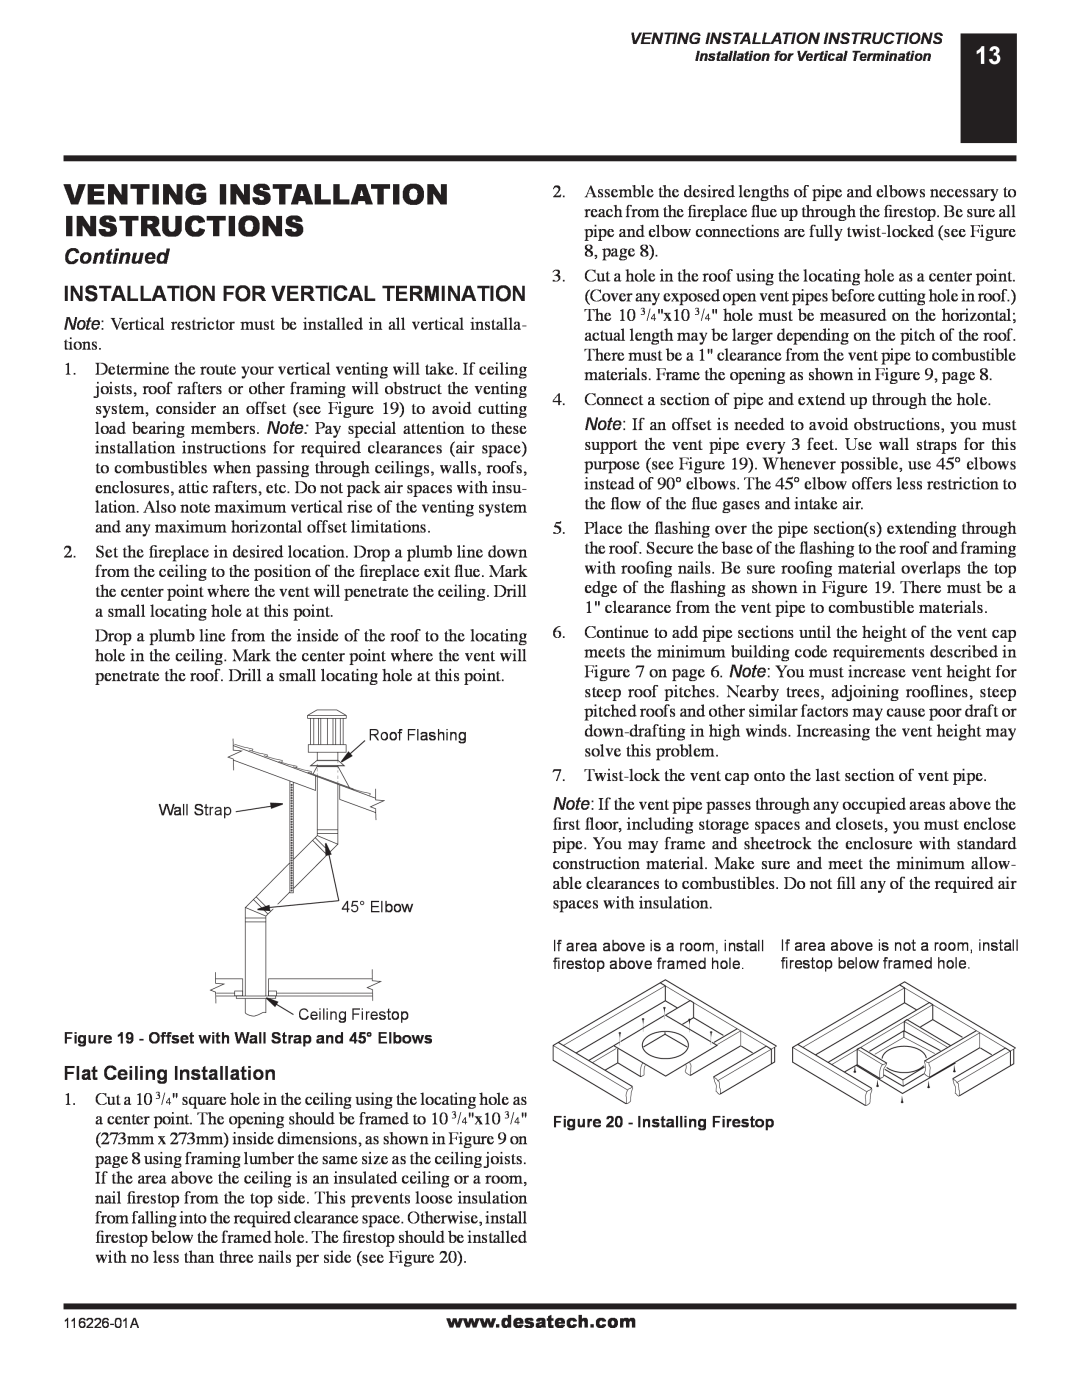 Desa (V)KC36P Installation For Vertical Termination, Flat Ceiling Installation, Venting Installation Instructions 